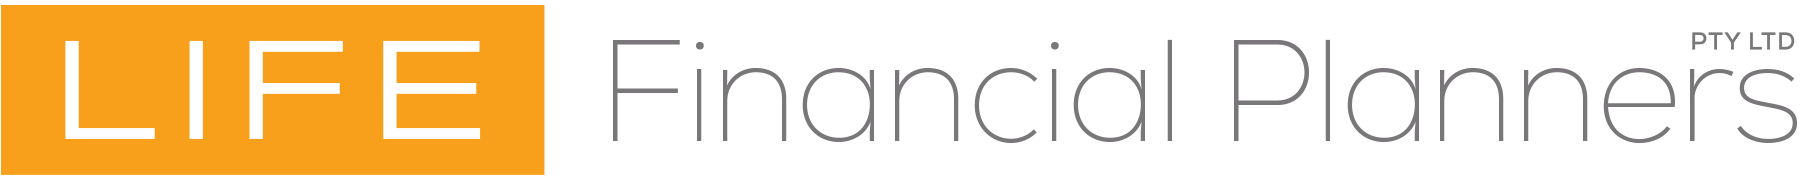 Life Financial Planners Sponsor Logo